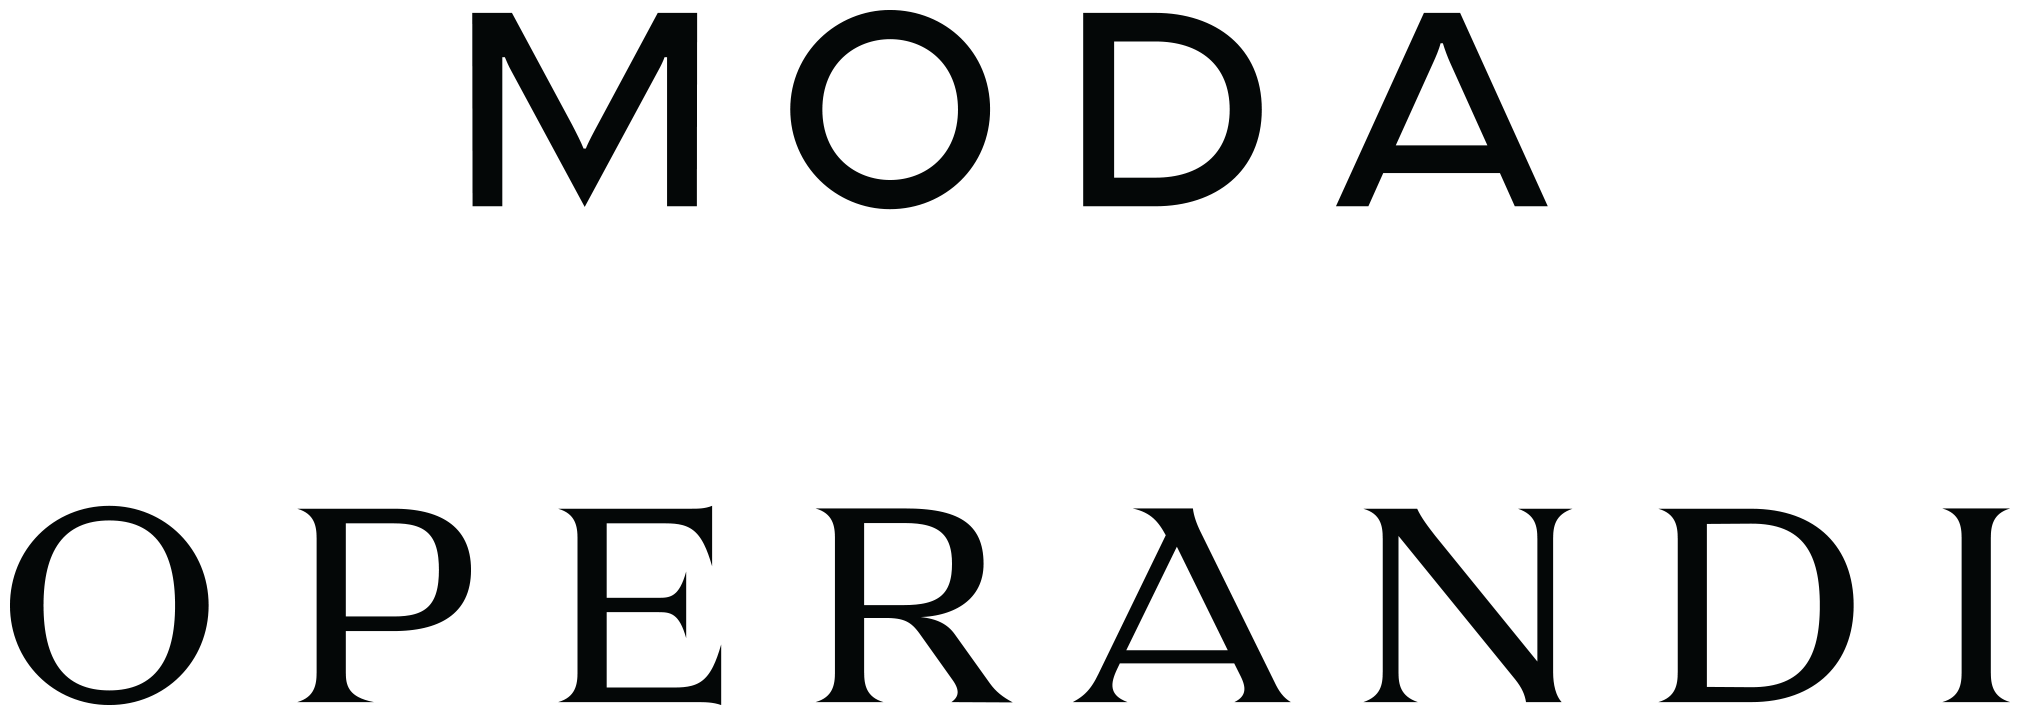 moda_operandi_logo_stacked.png